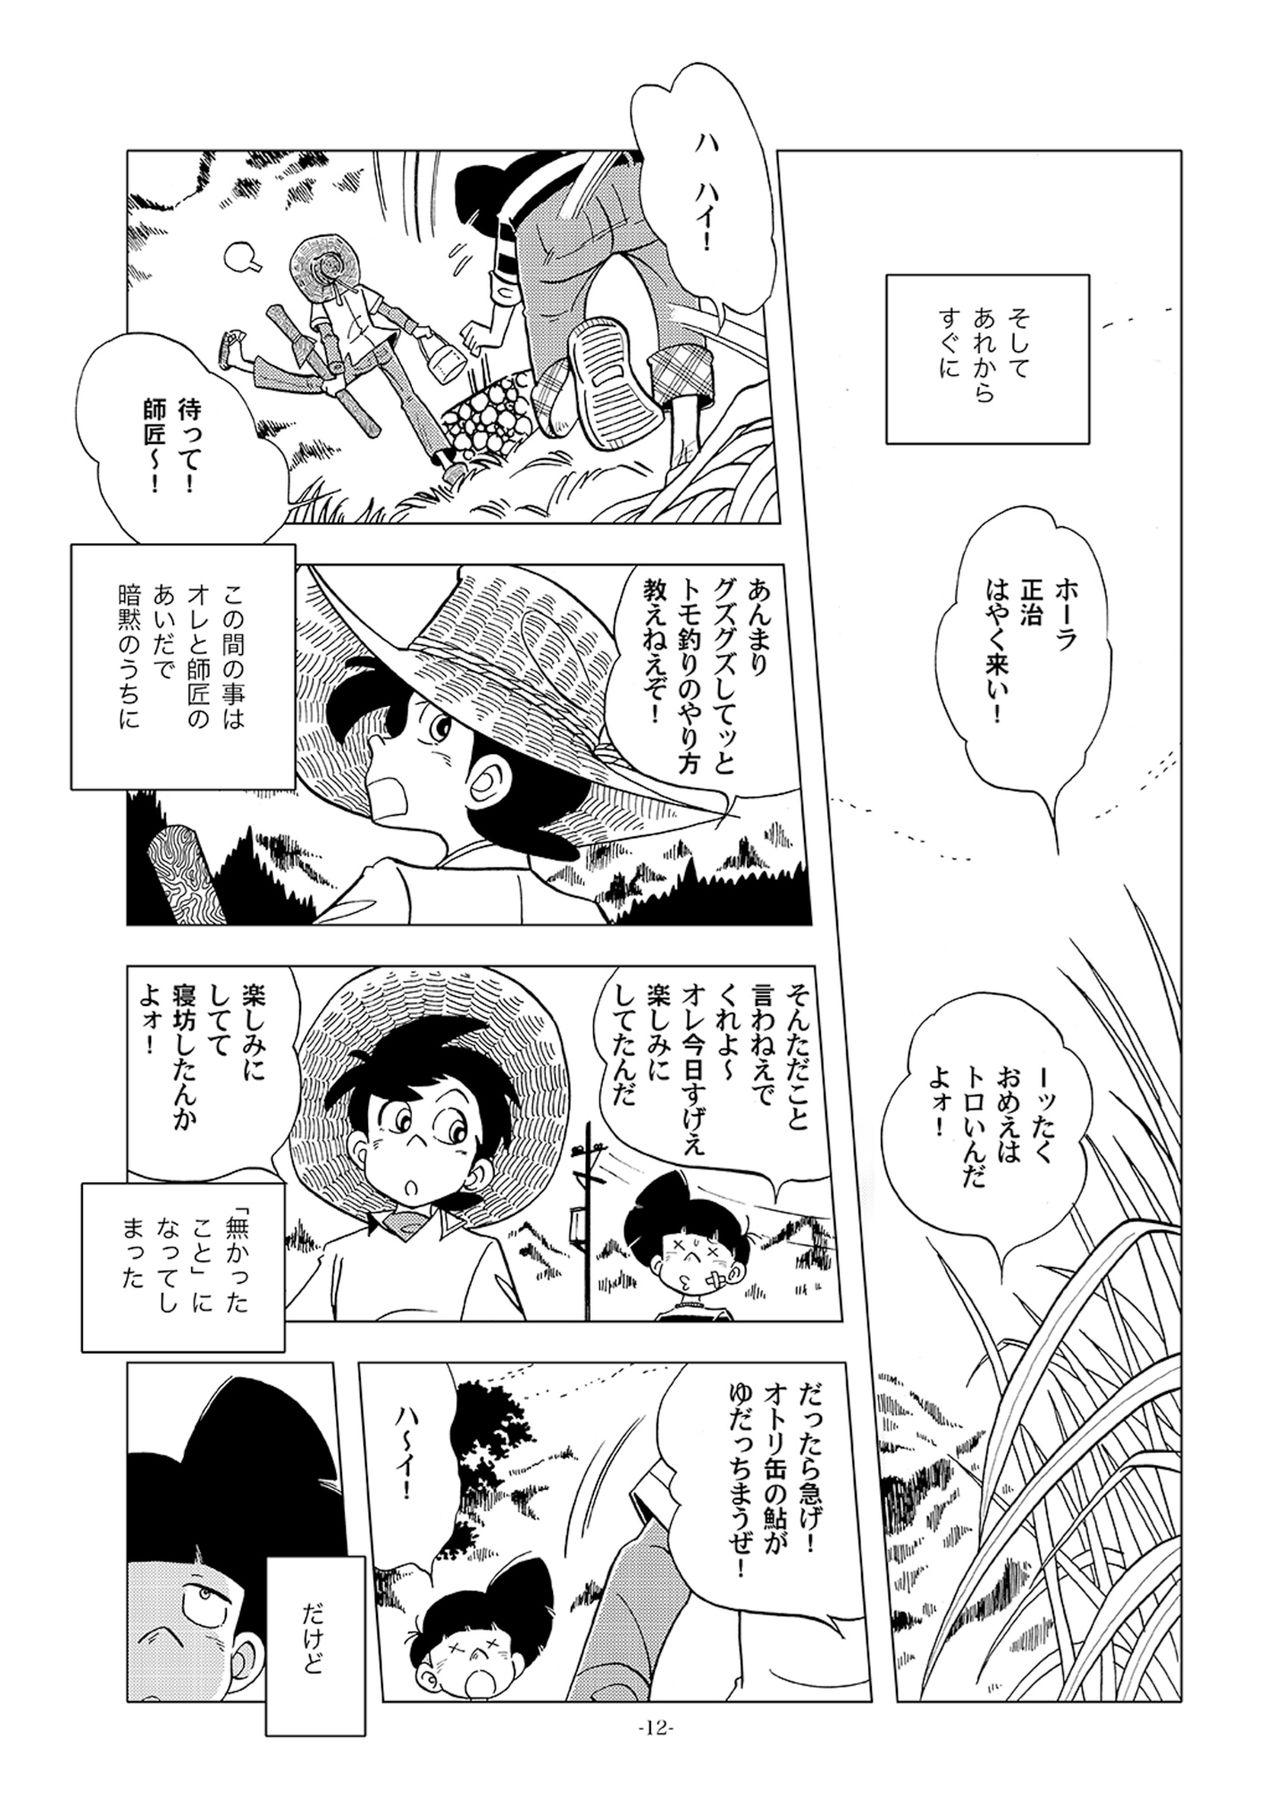 Exotic Dosu ke be nōson sai roku SP - Tsurikichi sanpei Pool - Page 12